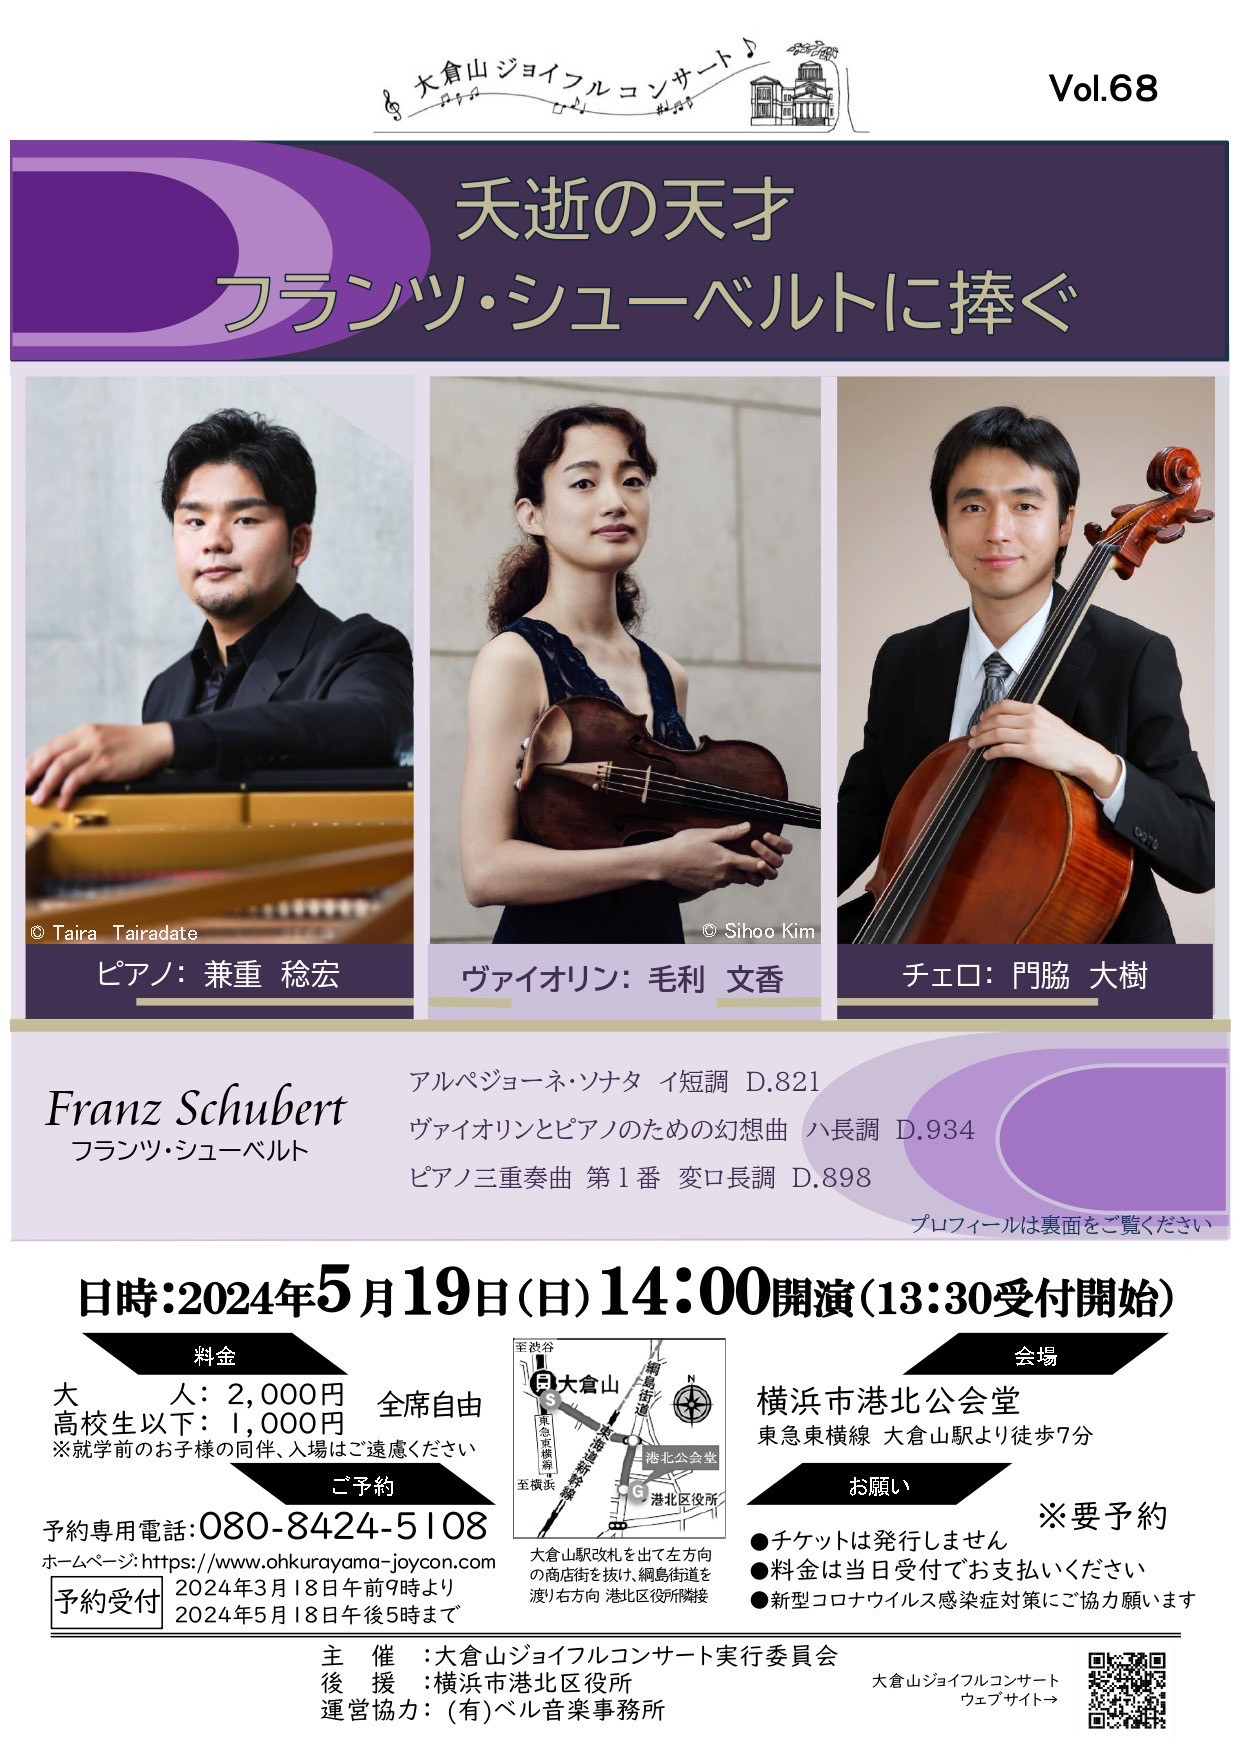 Chamber Music Concert with Fumika Mohri(Vn) and Hiroki Kadowaki (Vc)